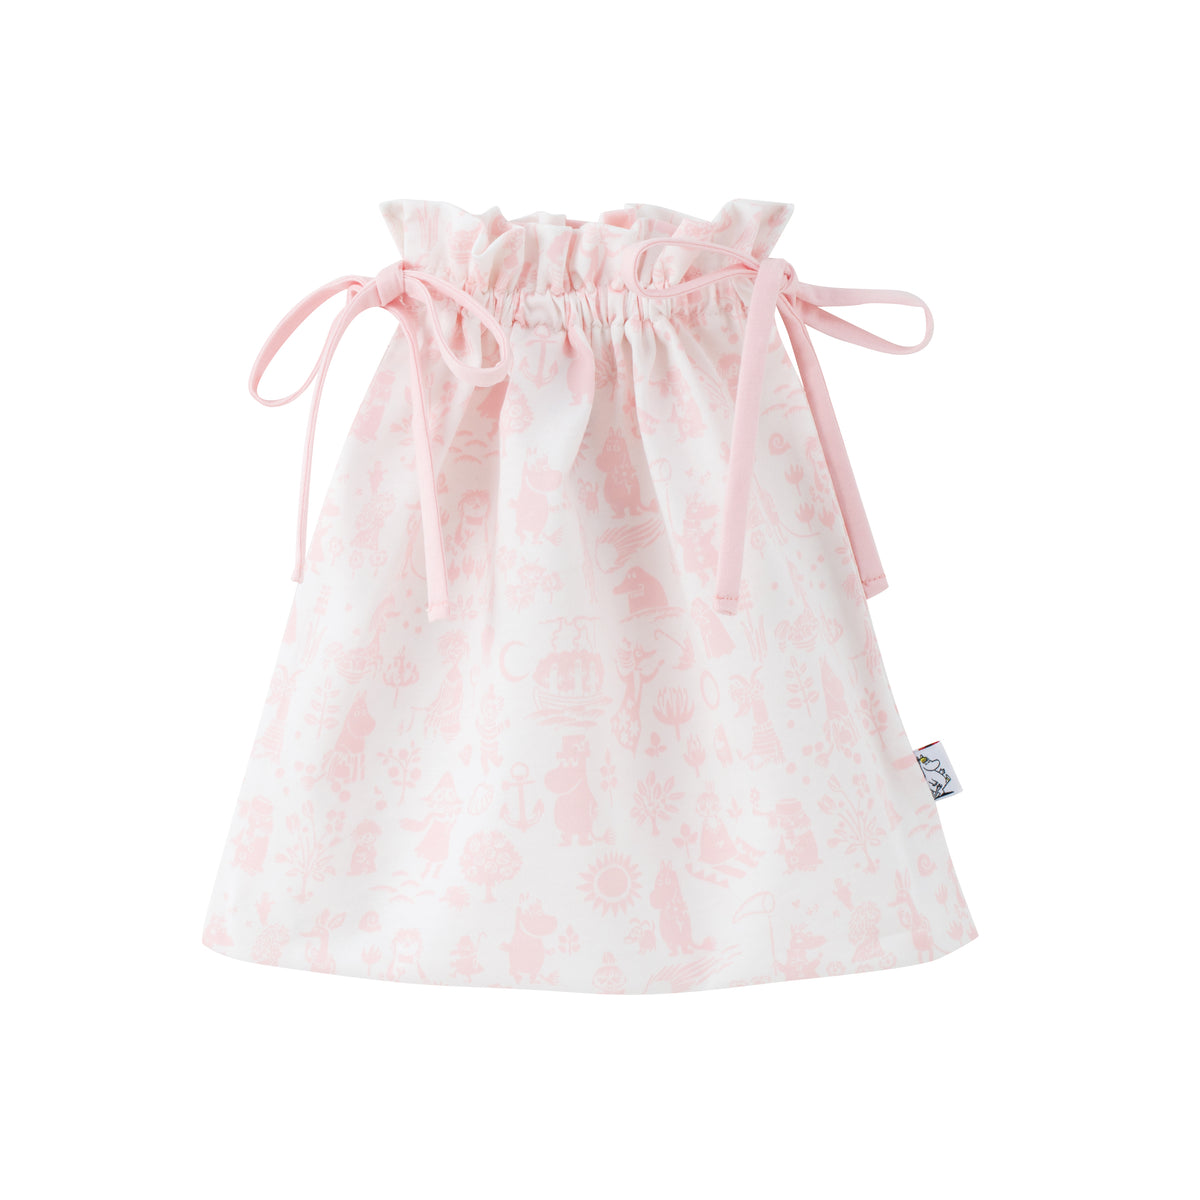 Vauva x Moomin - Baby Girls Moomin Print Gift Bag (Pink)  - Product Image 1